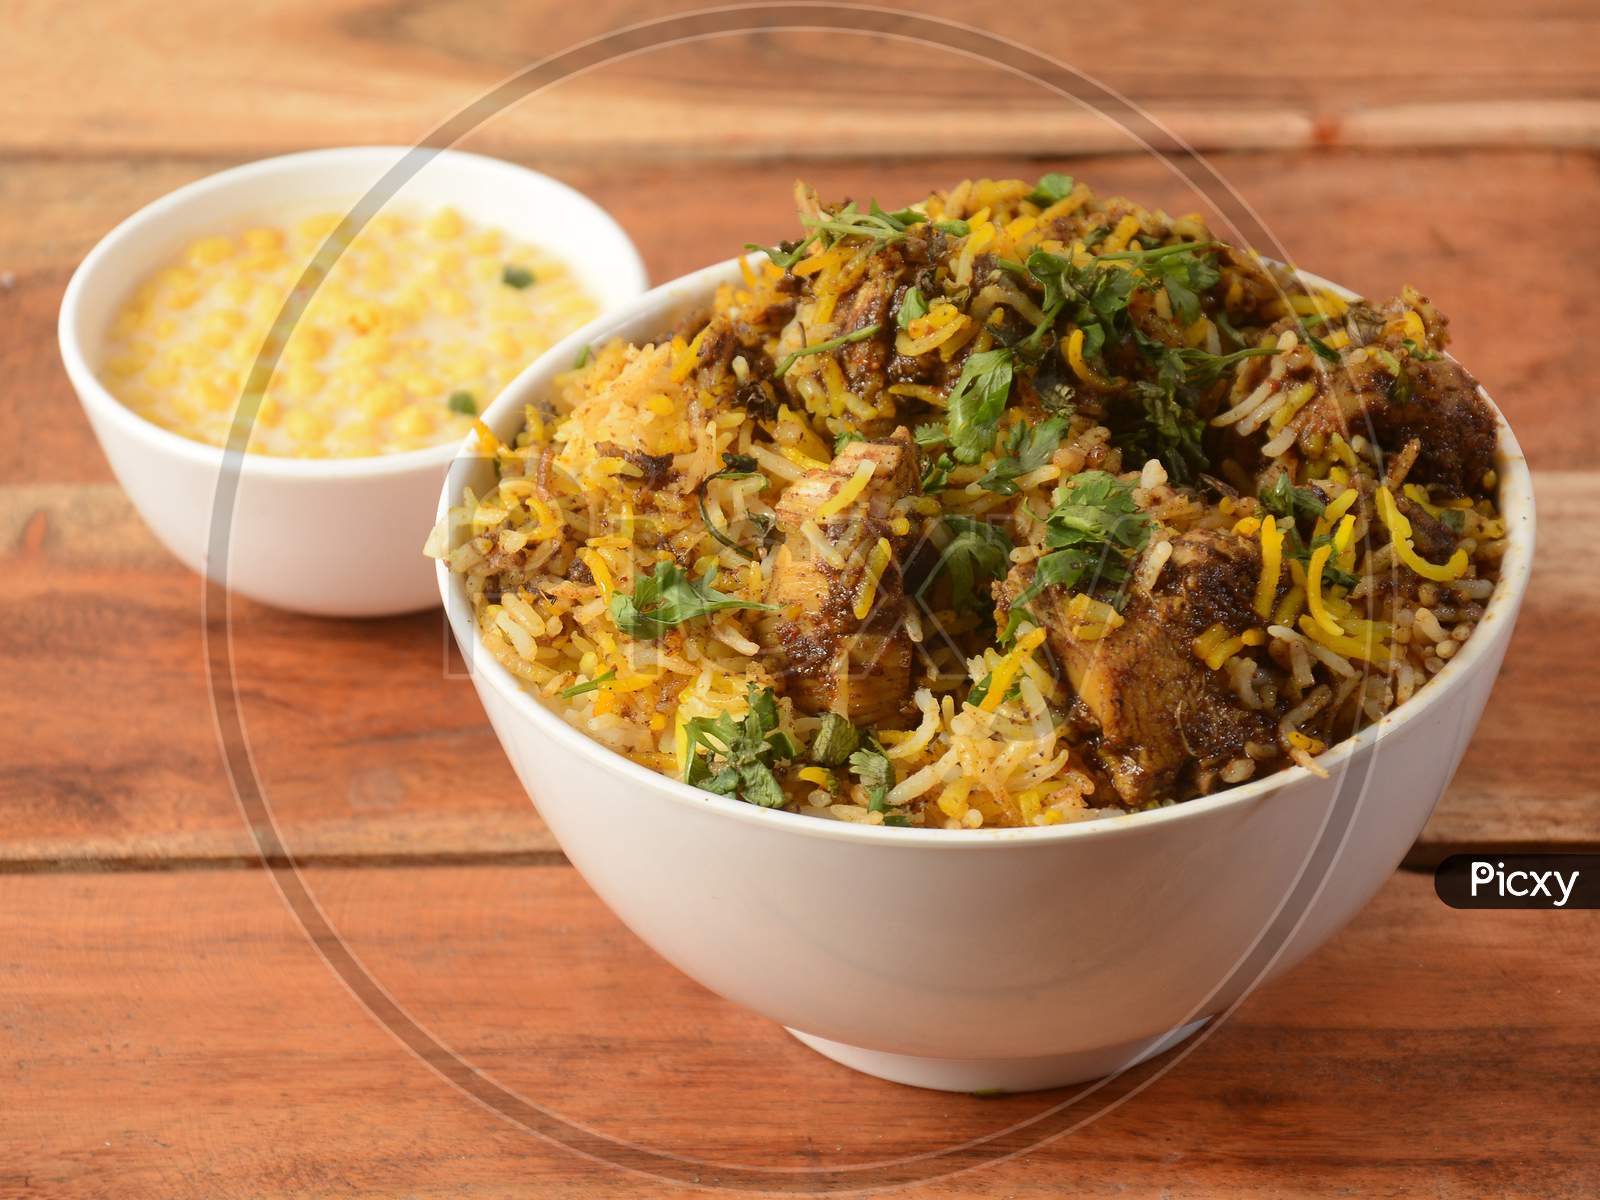 Traditional Hyderabadi Chicken Dum Biryani Made Of Basmati Rice Cooked With Masala Spices, Served With Boondi Raita, Selective Focus